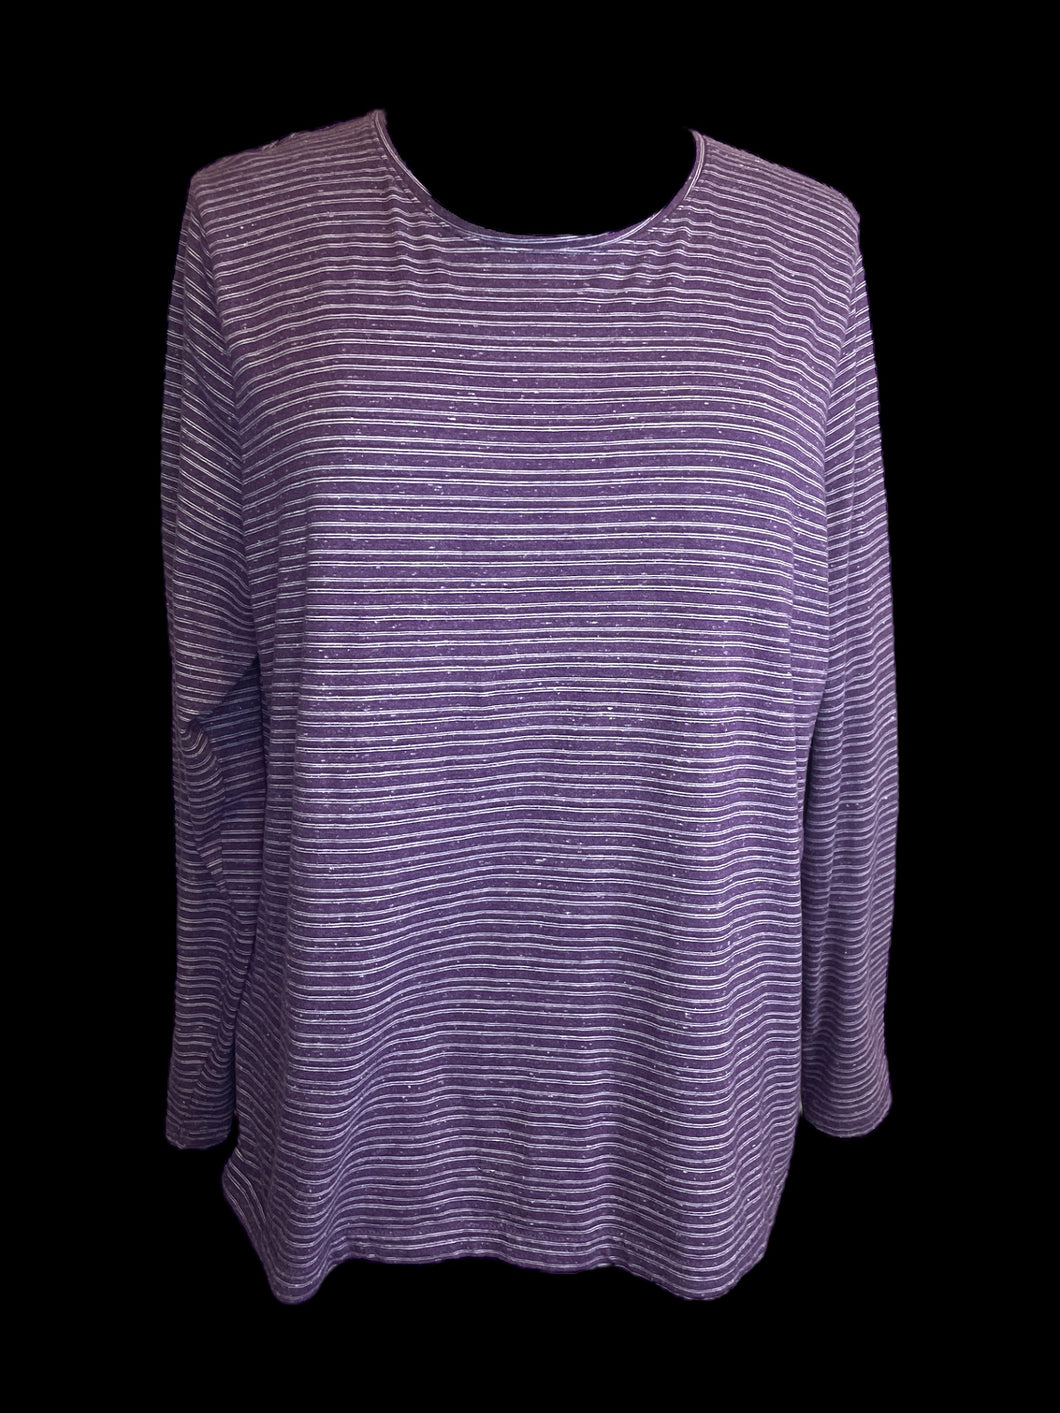 1X Purple & white long sleeve scoop neck top